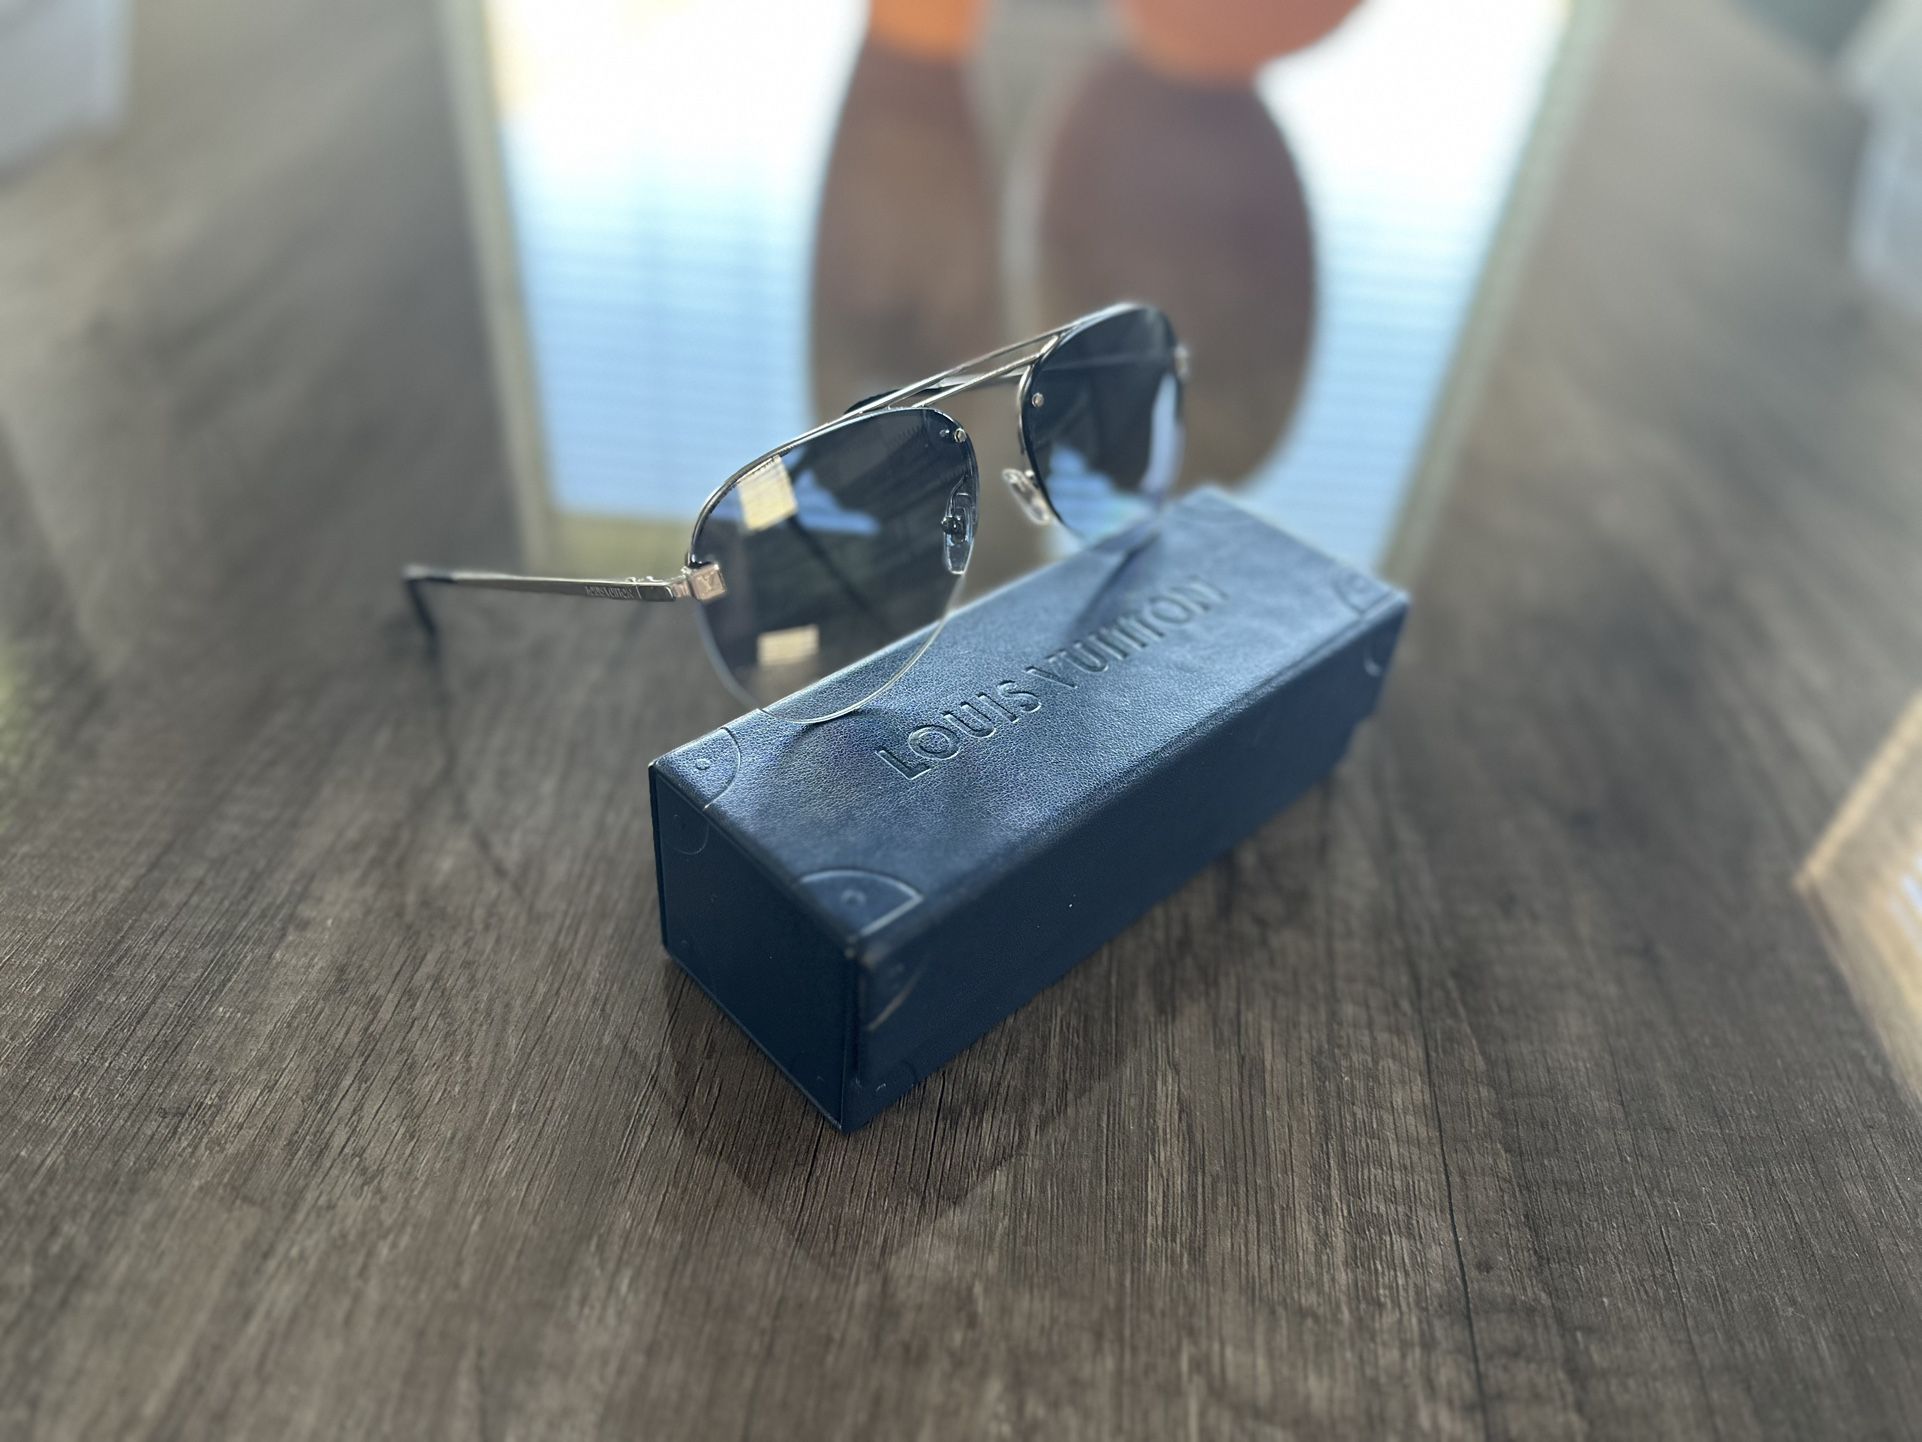 Louis Vuitton Clockwise Aviator Sunglasses